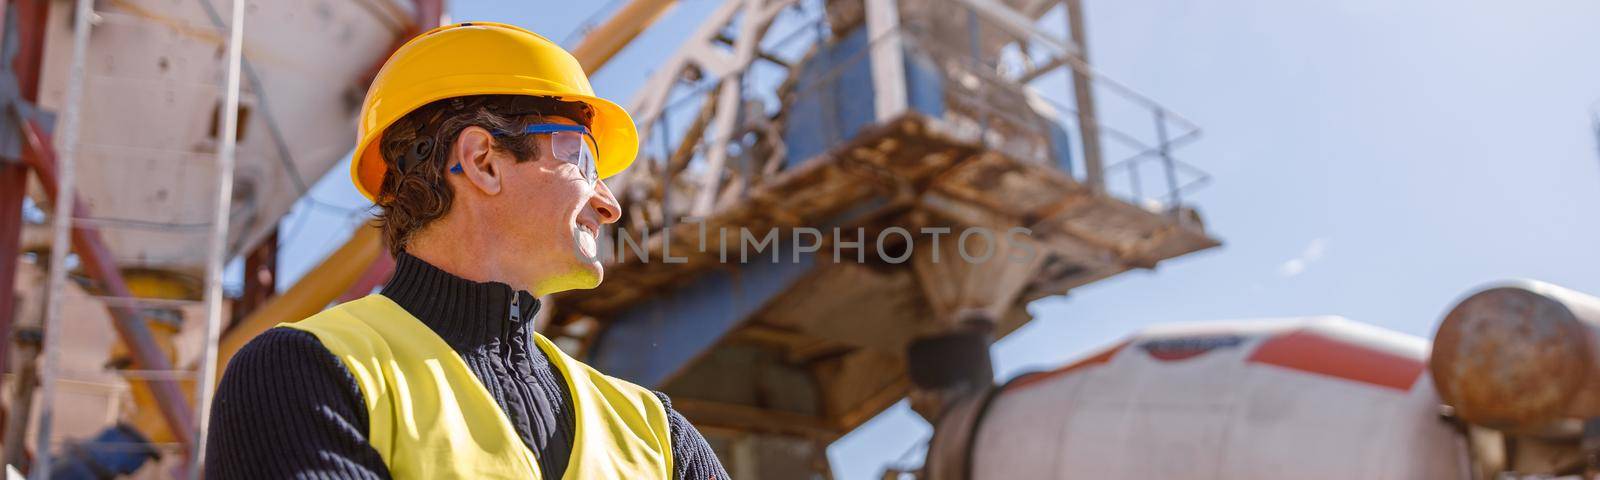 Smiling male engineer standing outdoors at industrial site by Yaroslav_astakhov